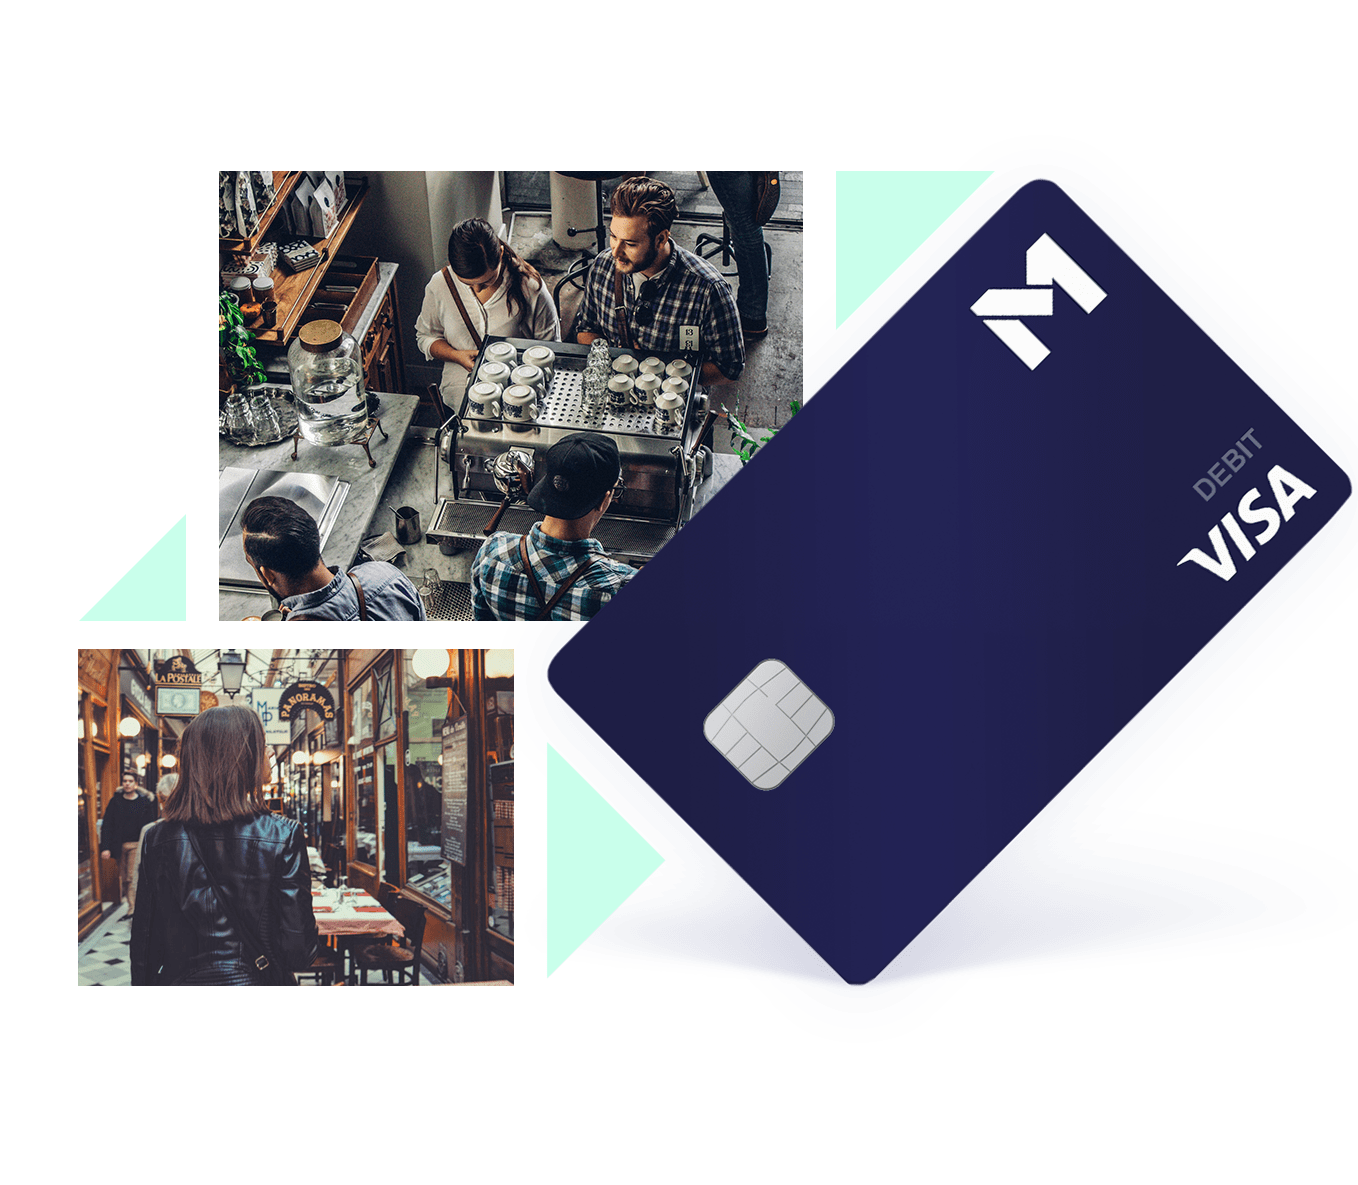 Blue M1 Debit Card on a Diagnol over images of people at a café